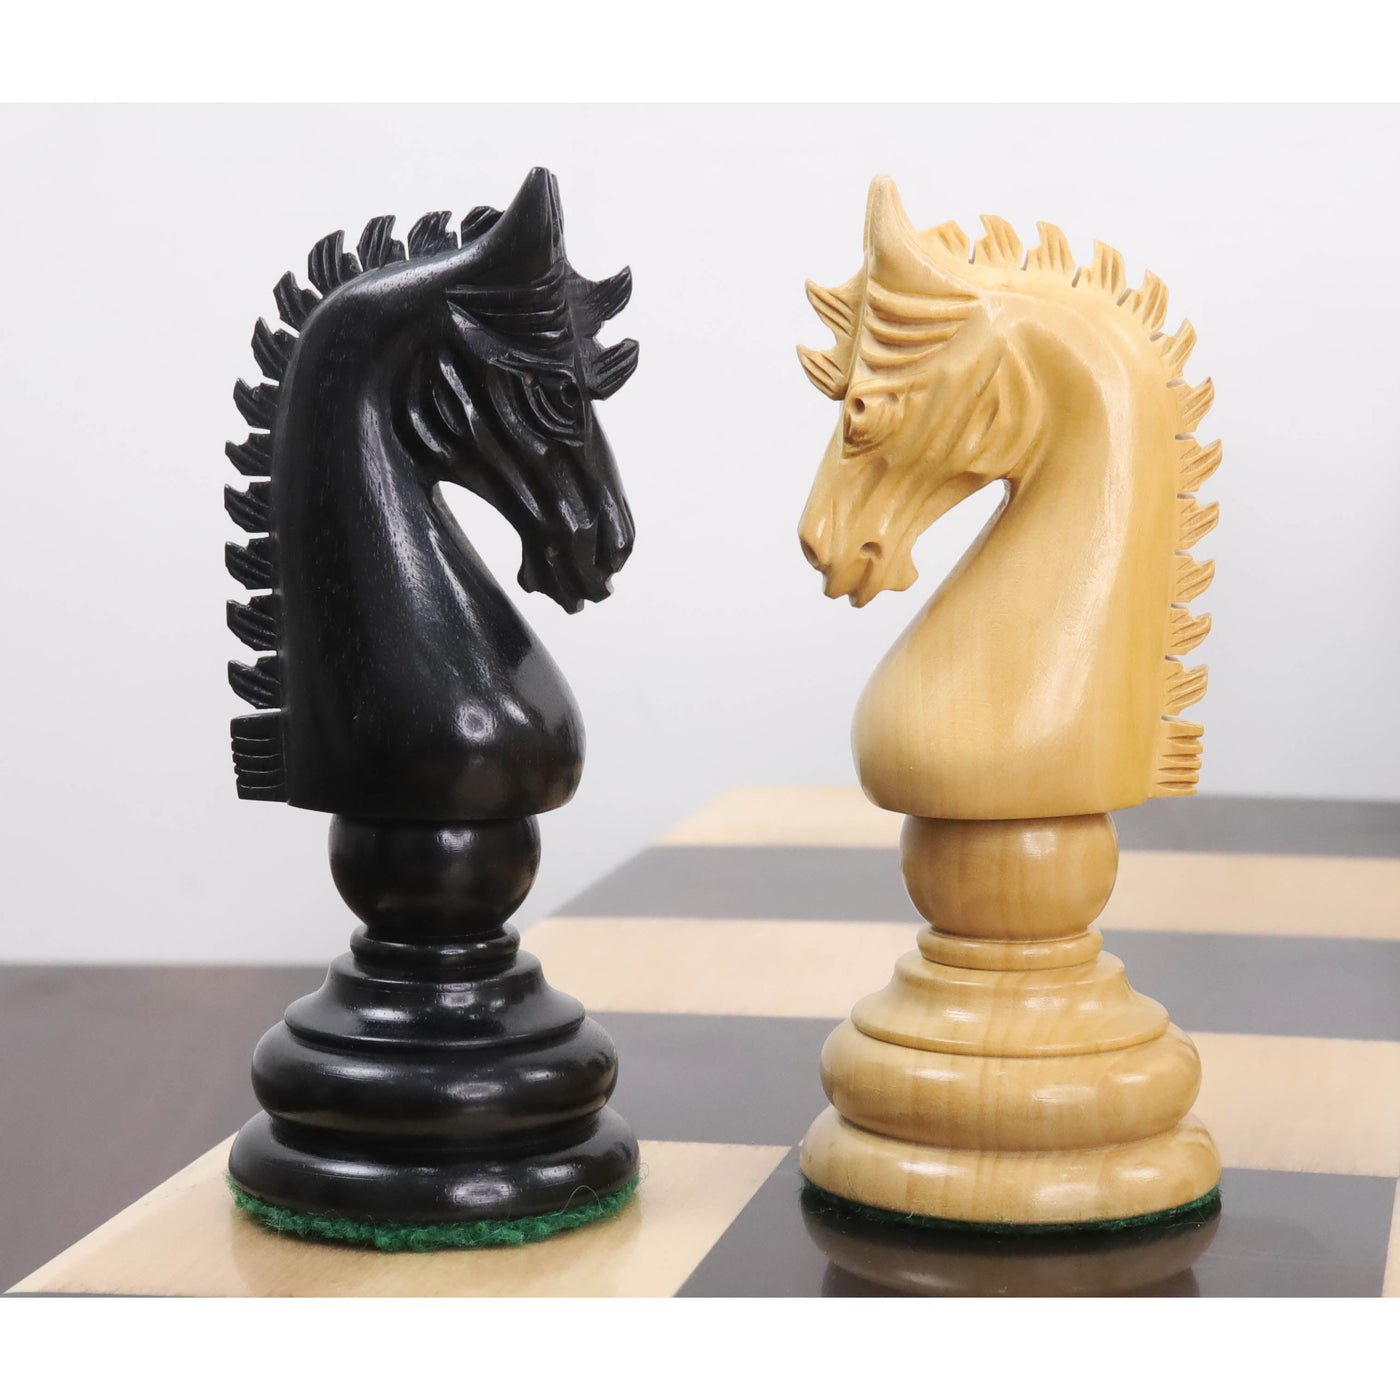 4.6" Medallion Luxury Staunton Chess Set - Chess Pieces Only - Triple Weight Ebony Wood